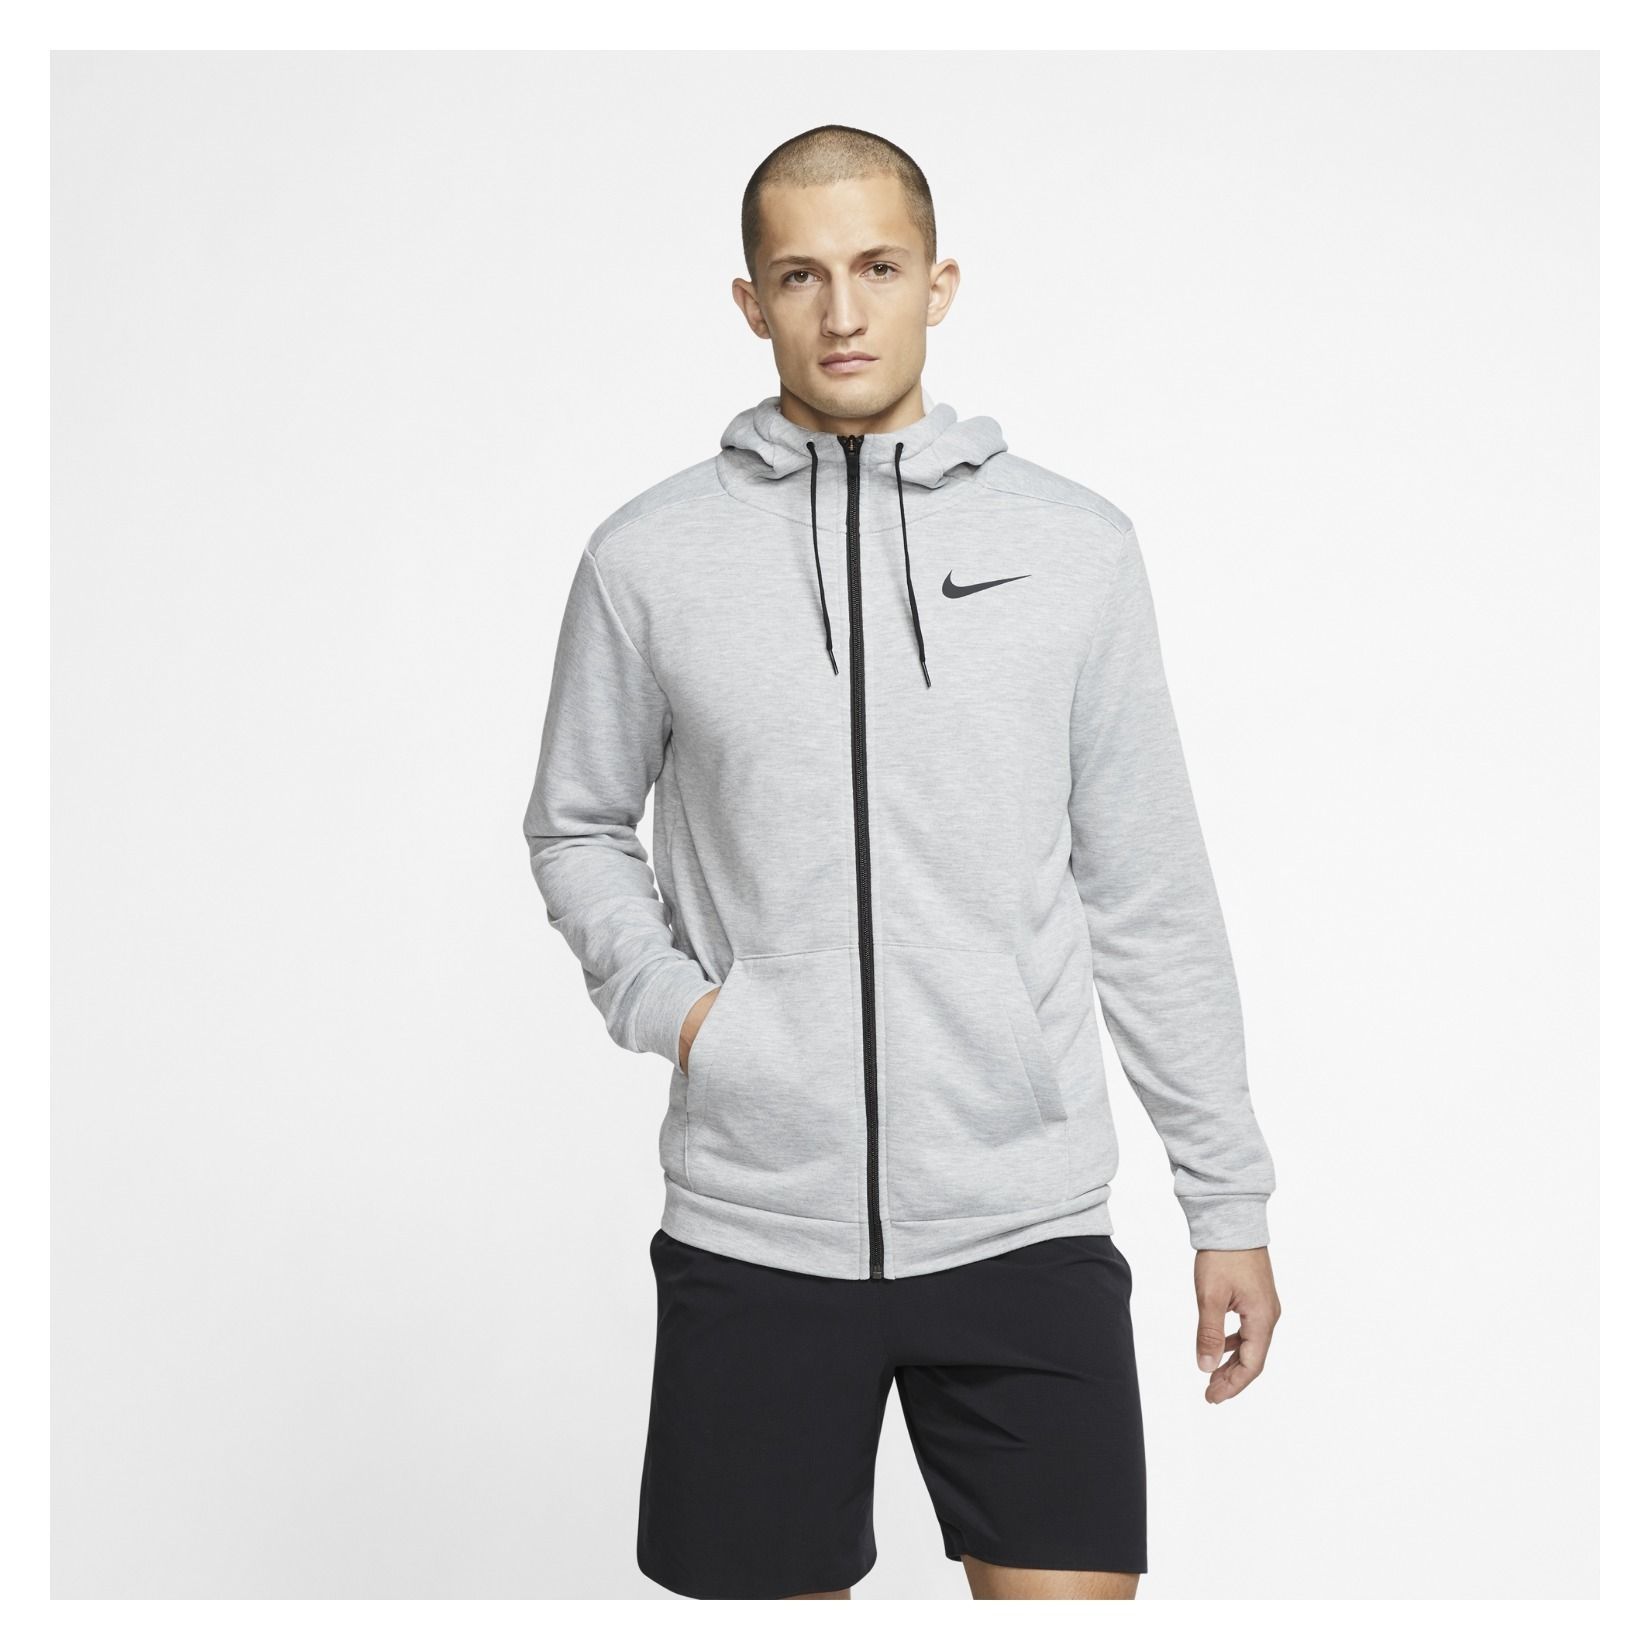 Nike Dri-FIT Full-Zip Training Hoodie - Kitlocker.com